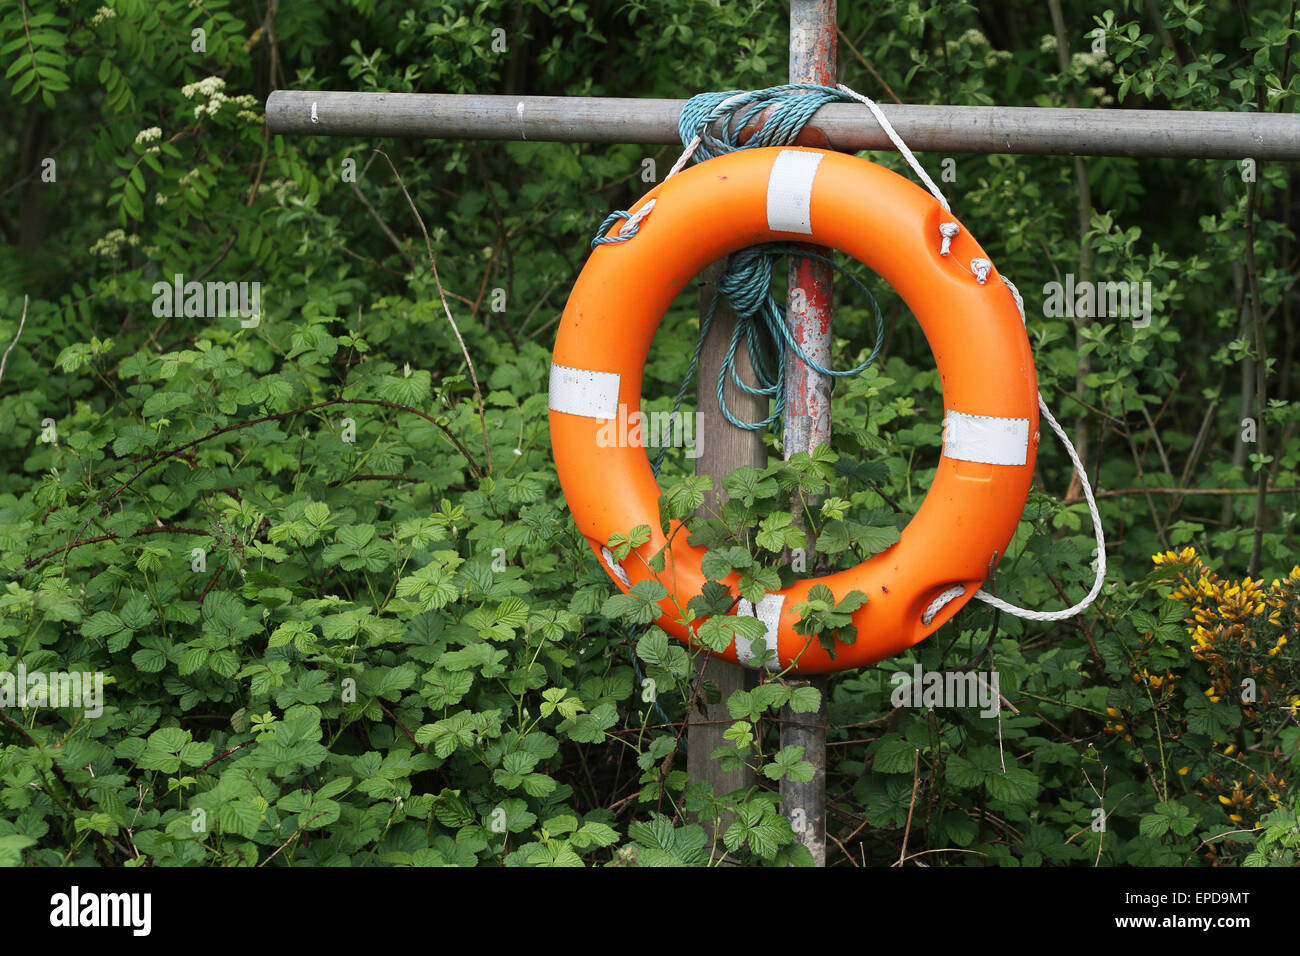 Basic life saving gear at commercial fishing lake. Stock Photo